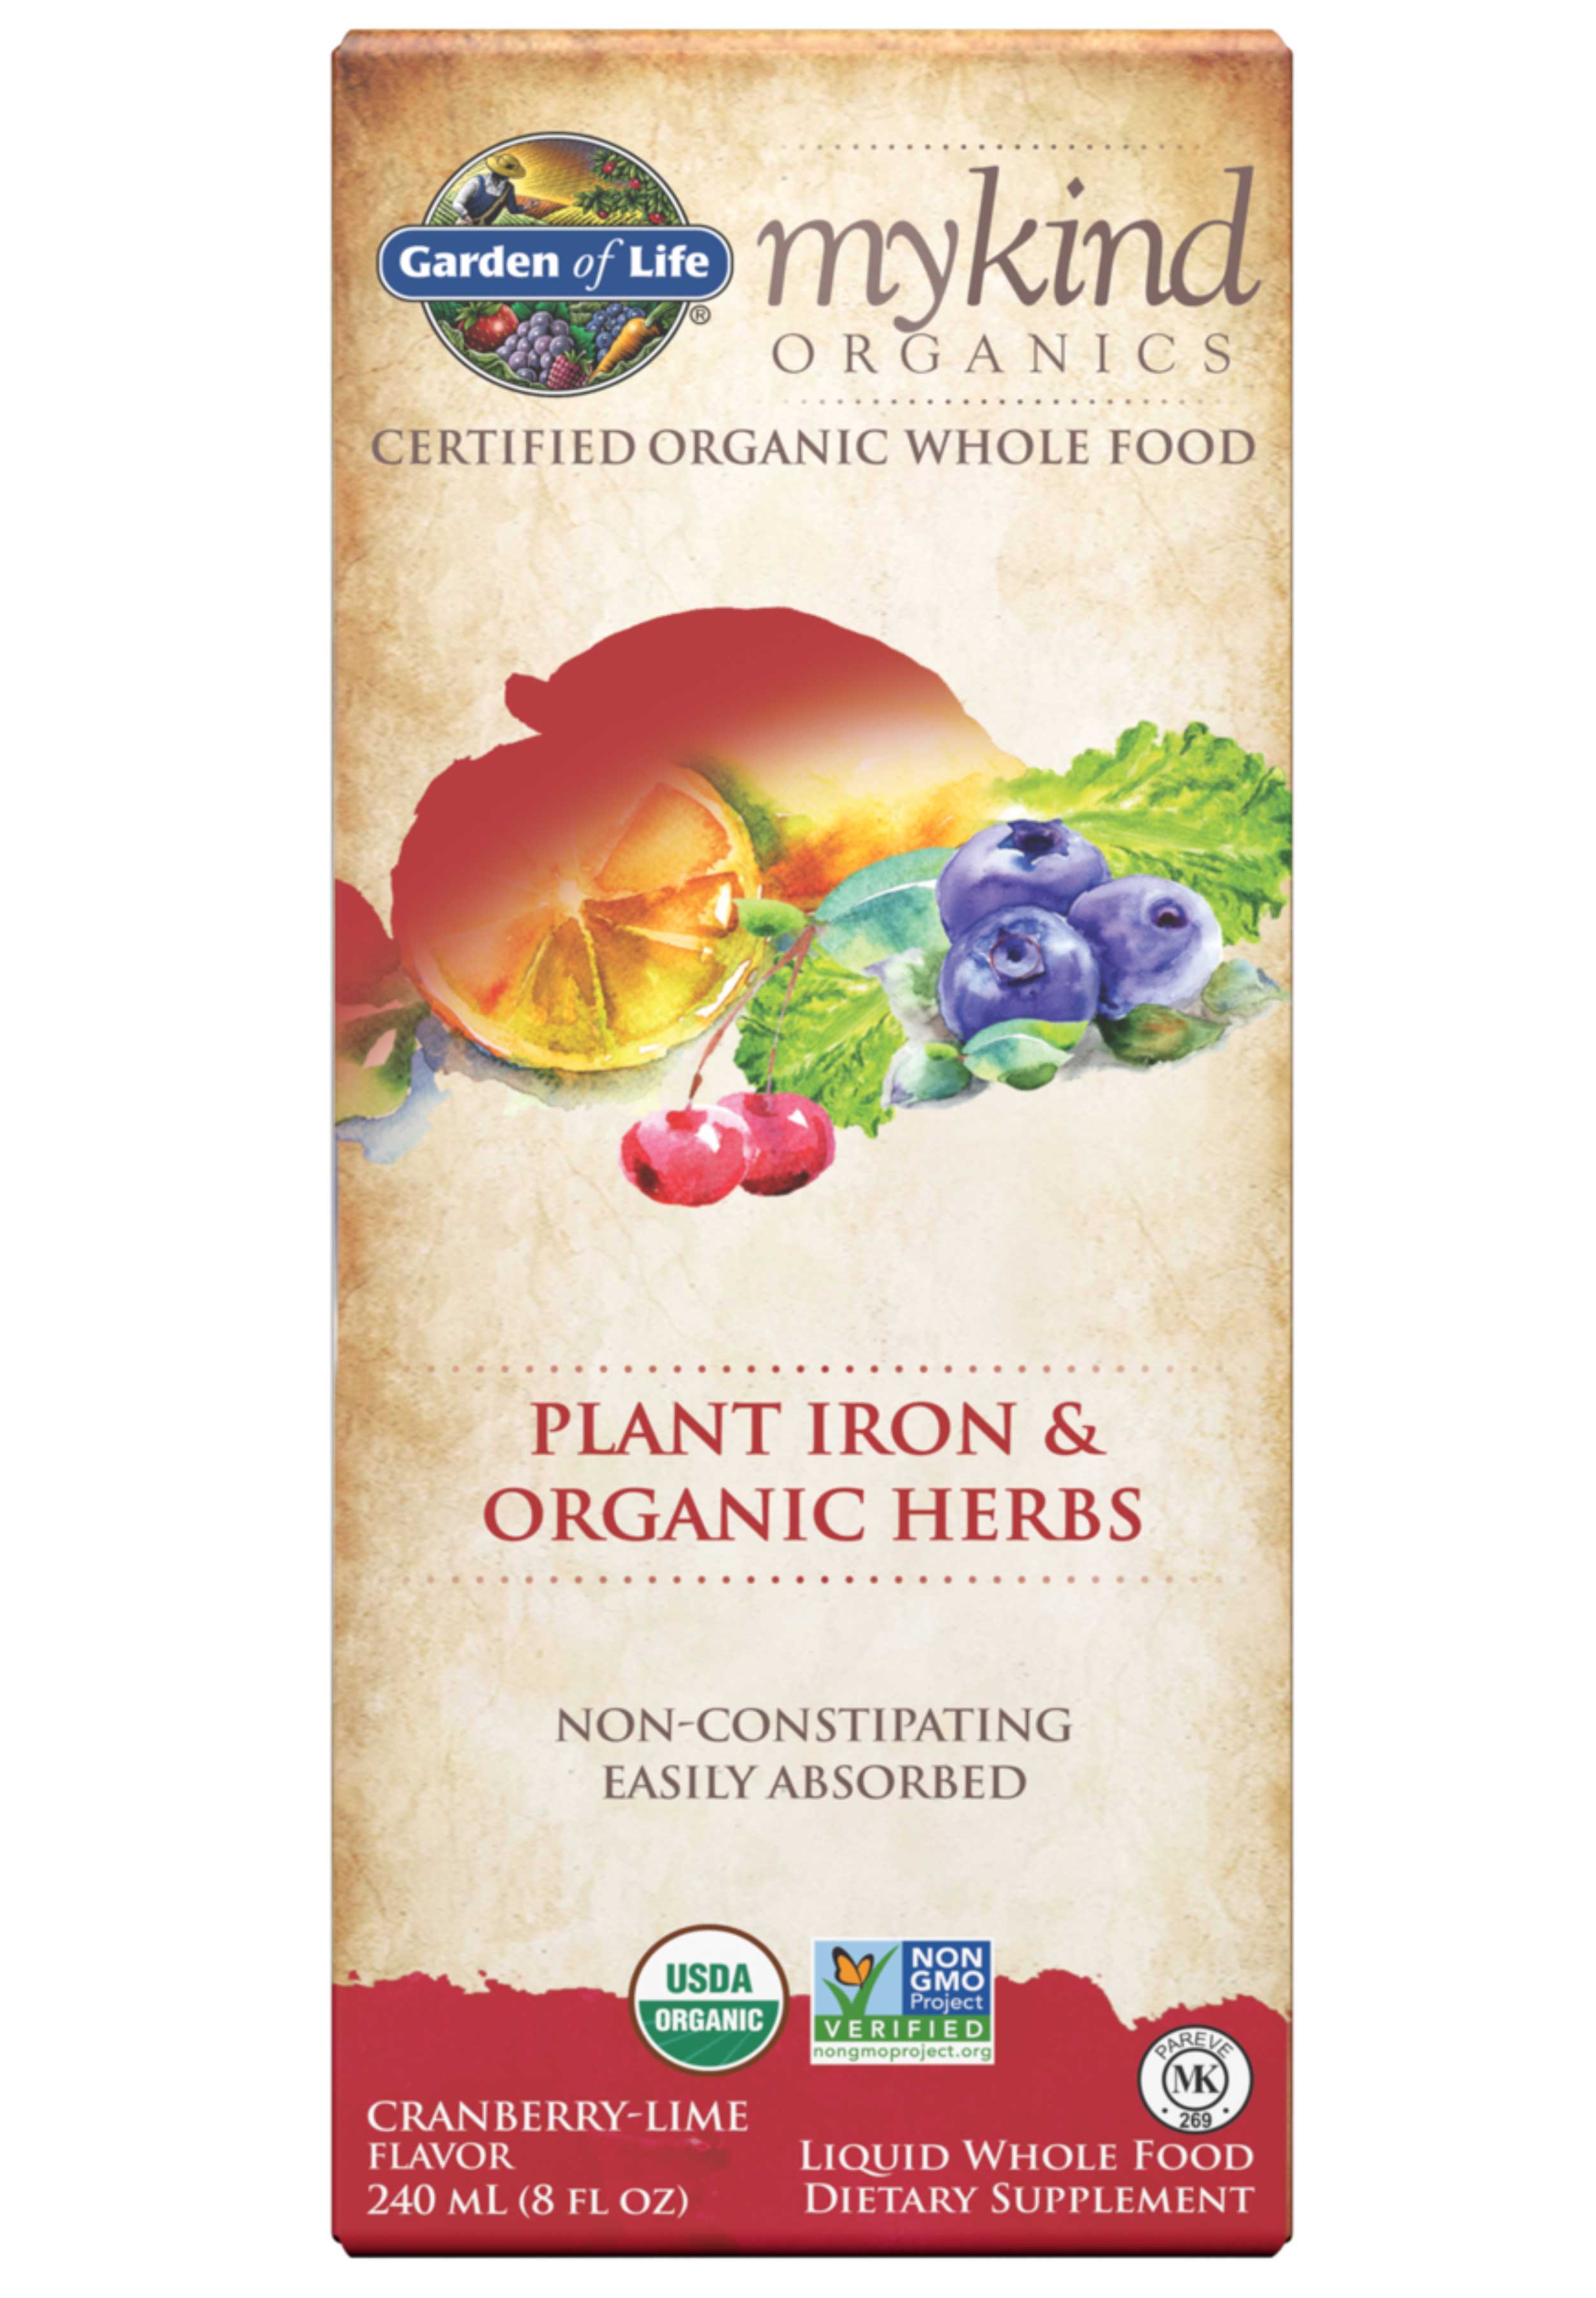 Garden of Life mykind Organics Plant Iron & Organic Herbs